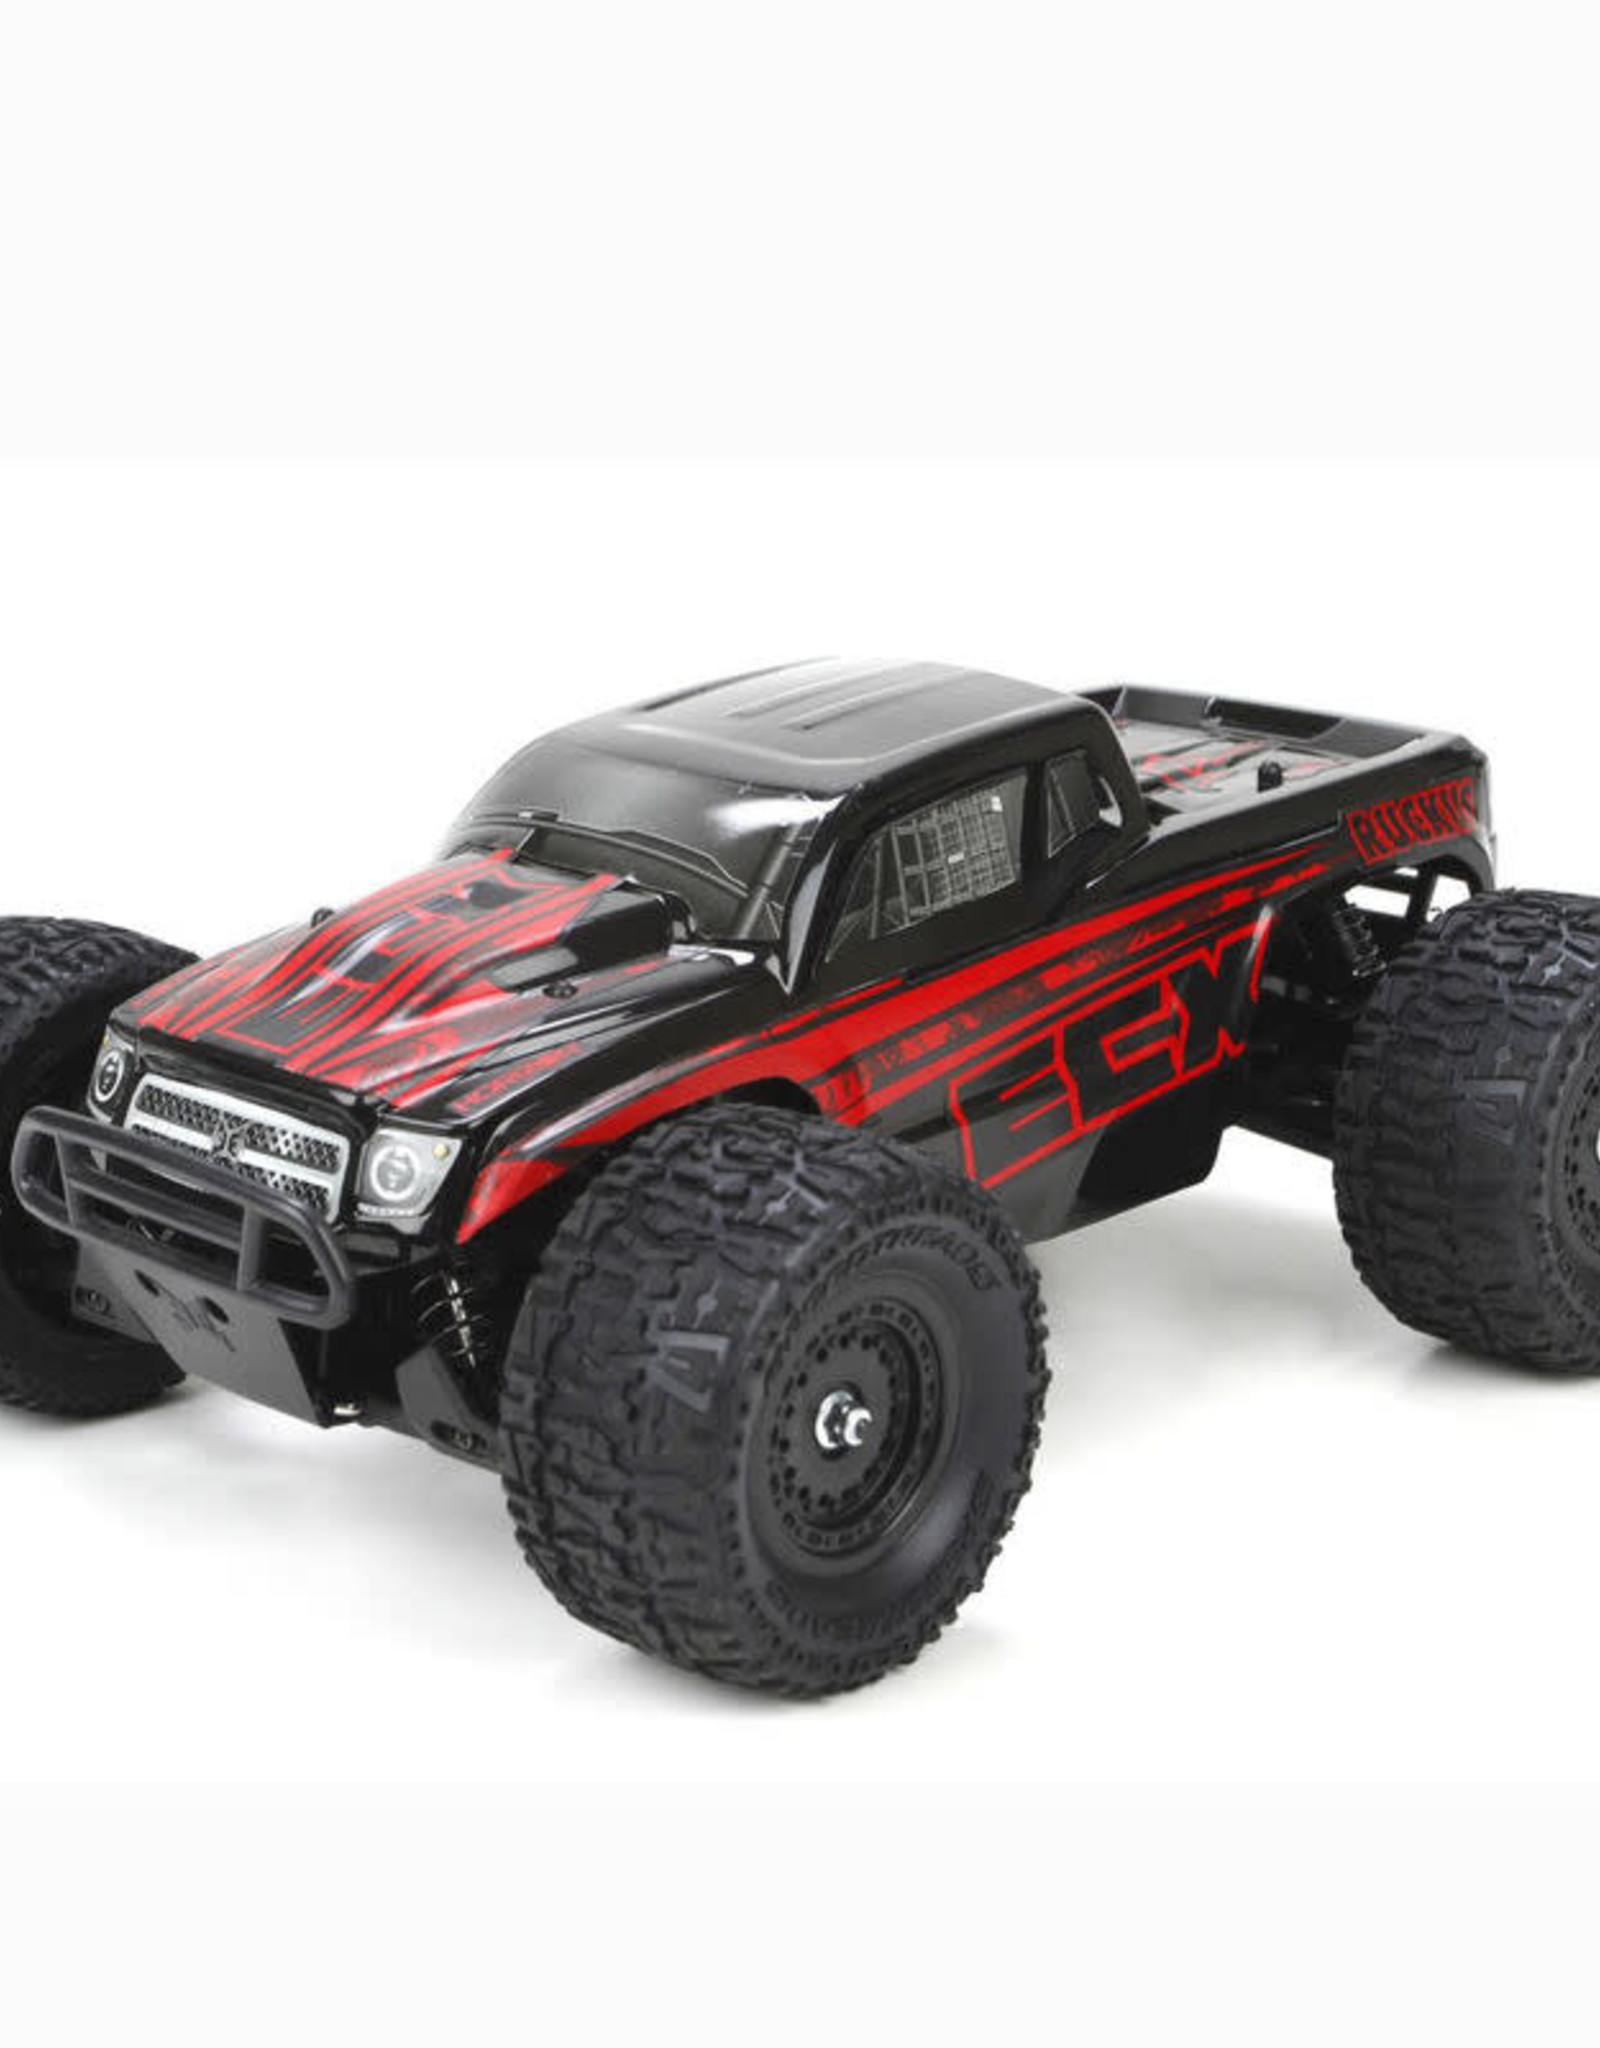 ECX ECX010000T1 Ruckus 1/18 4WD Monster Truck Black/Red RTR